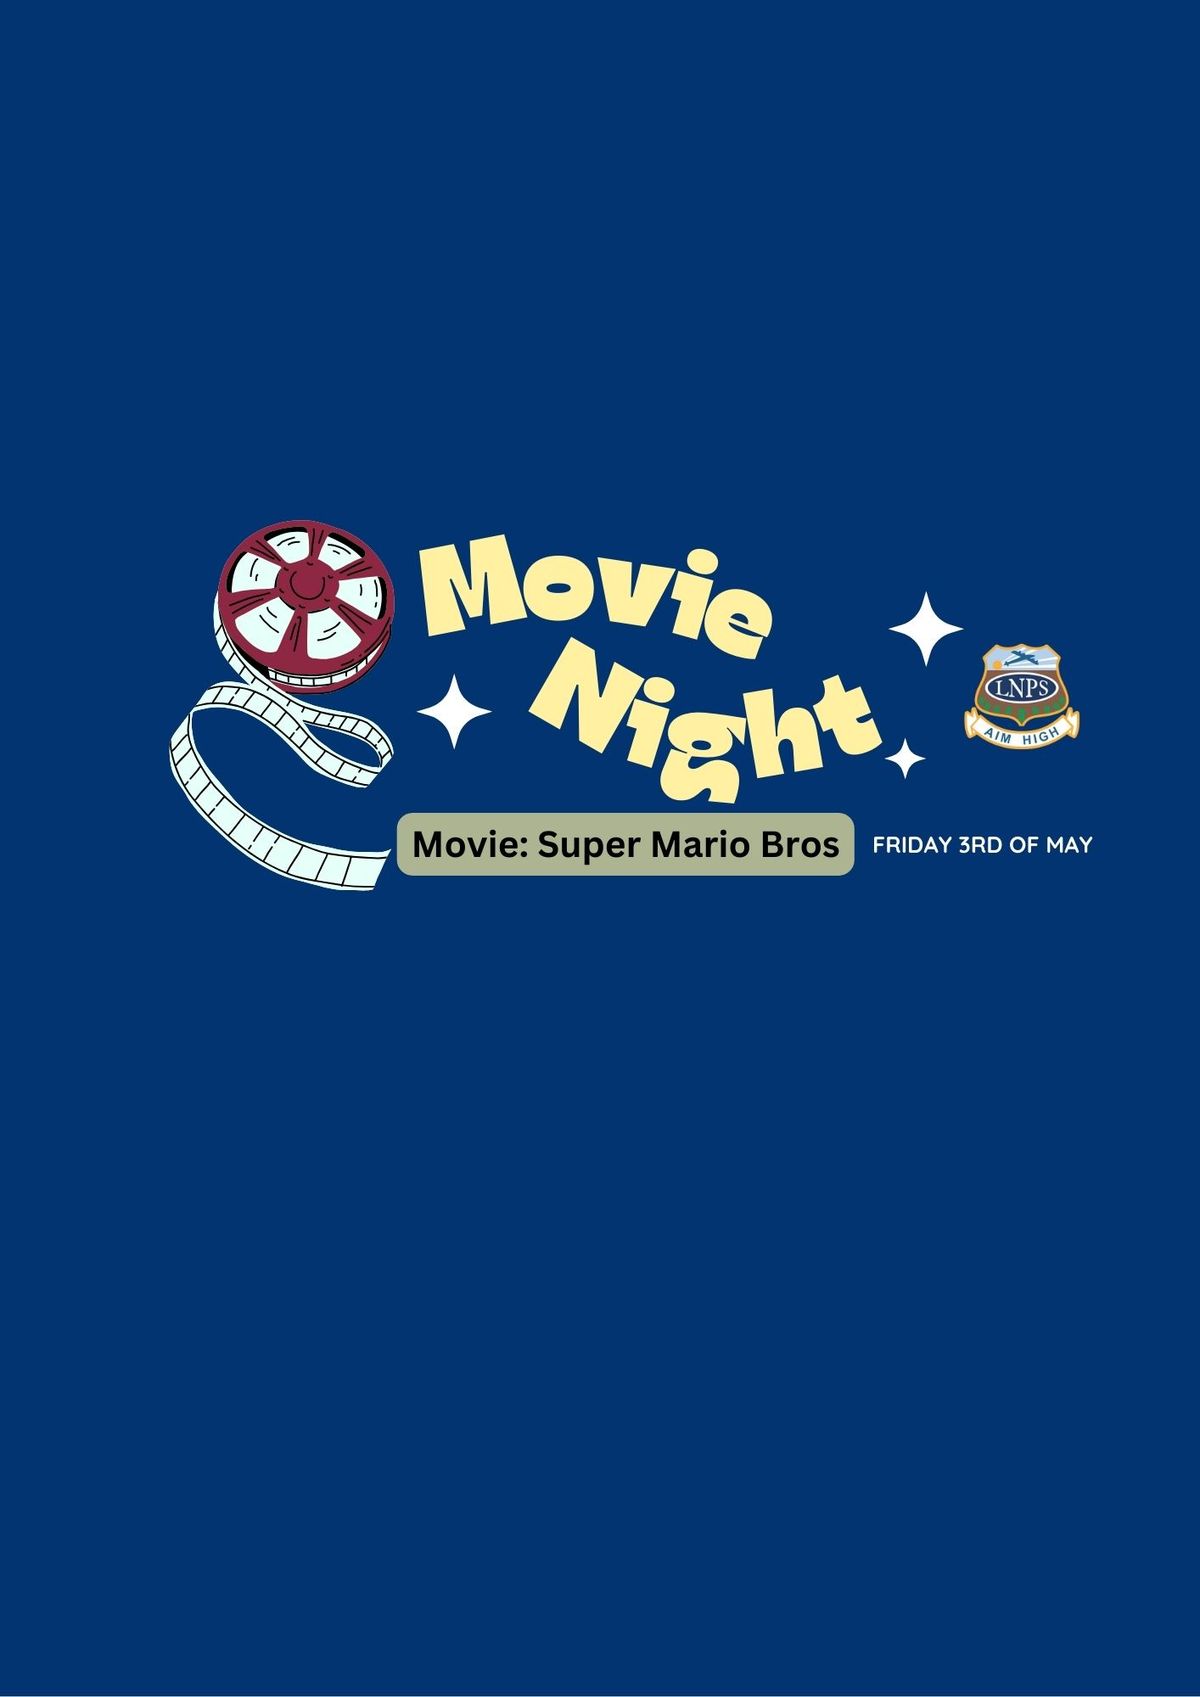 LNPS Movie Night - Mario Bros